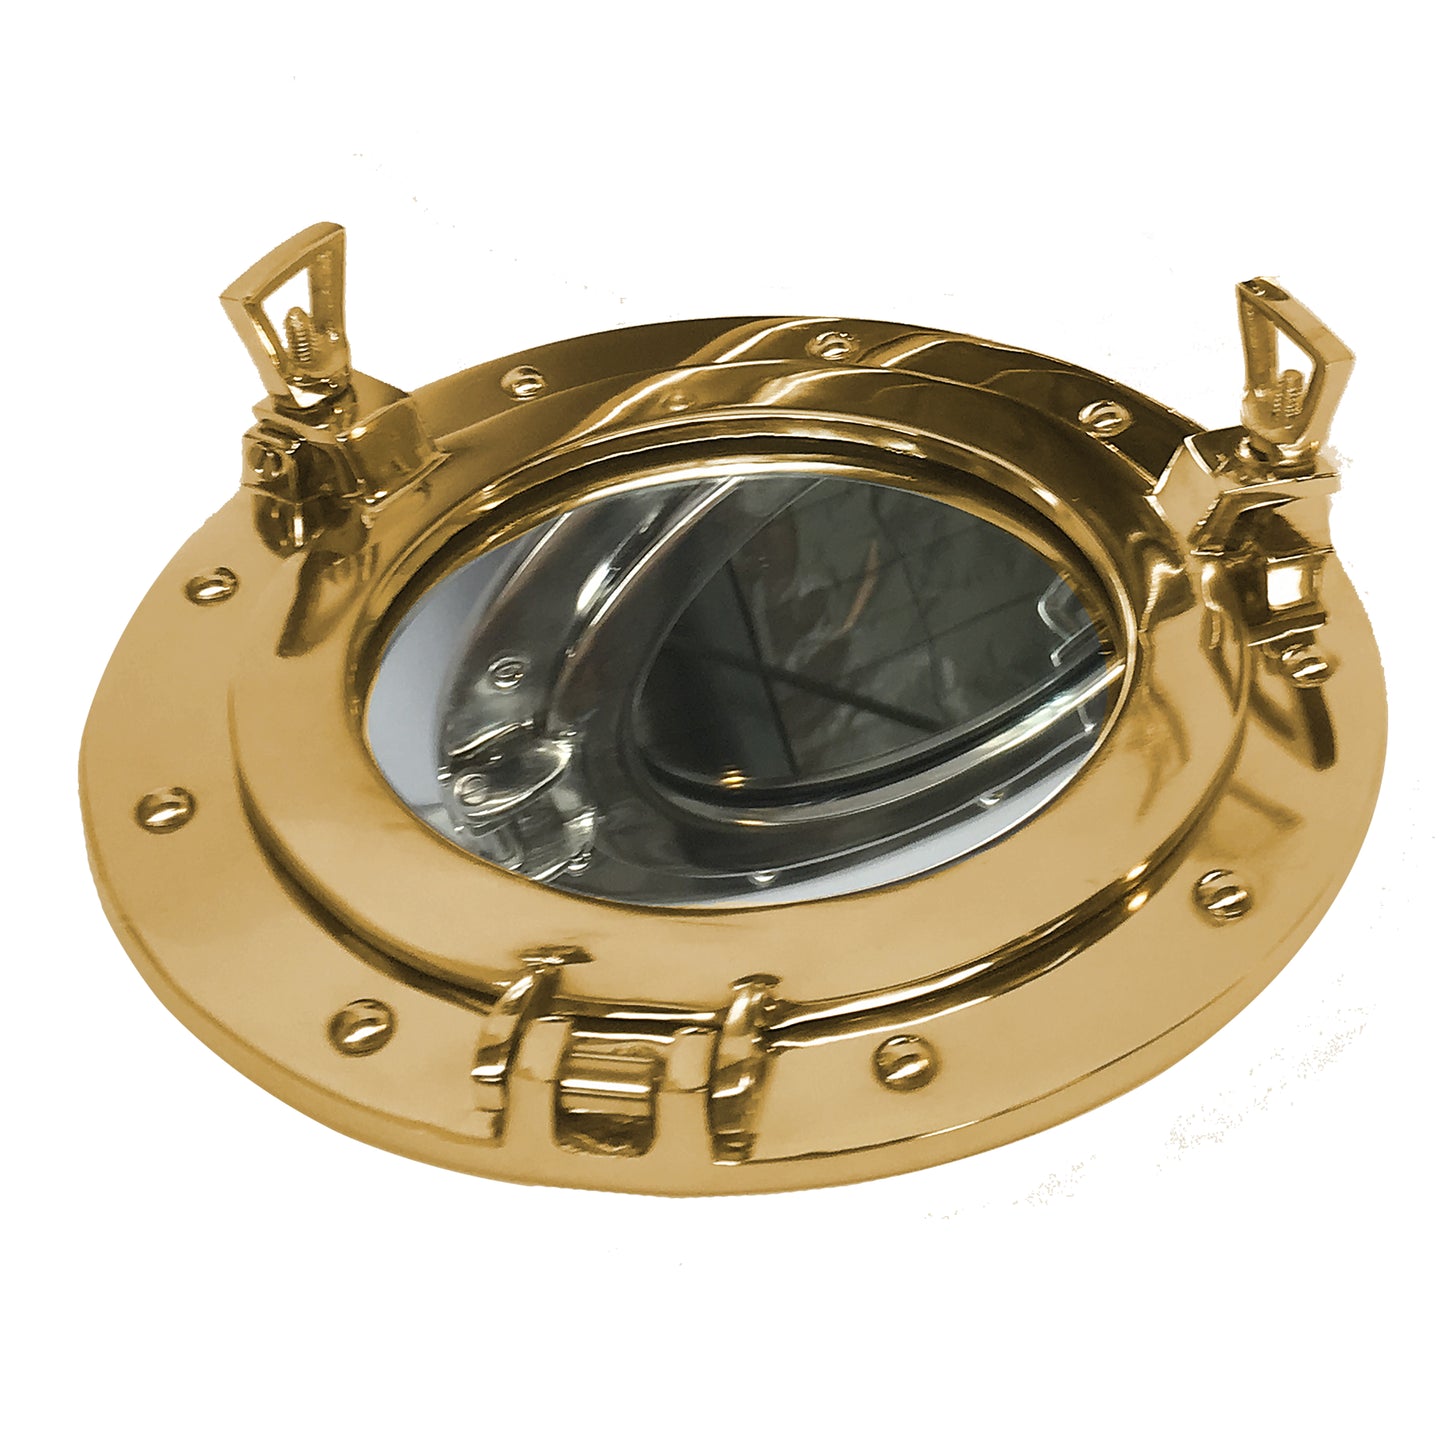 Brass 380mm Porthole Mirror